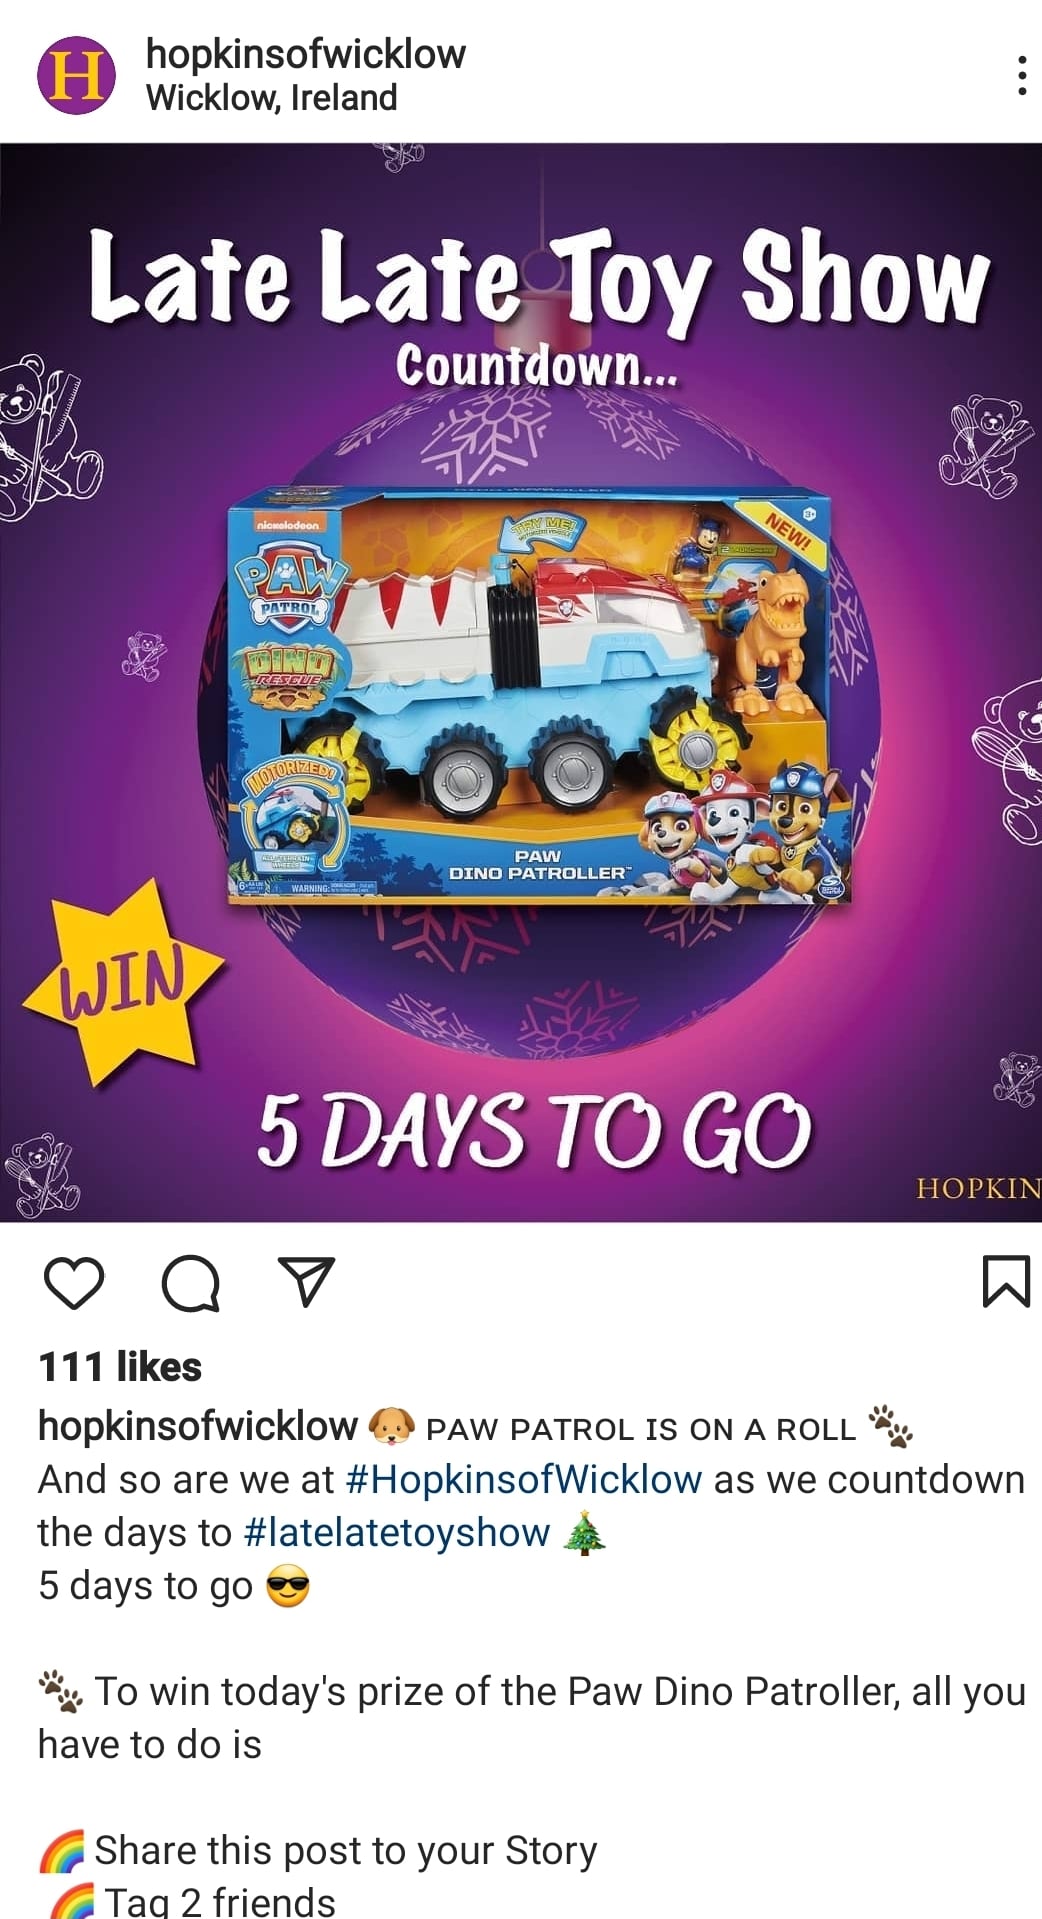 Hopkins toy shop Instagram sample posts 5 days to go